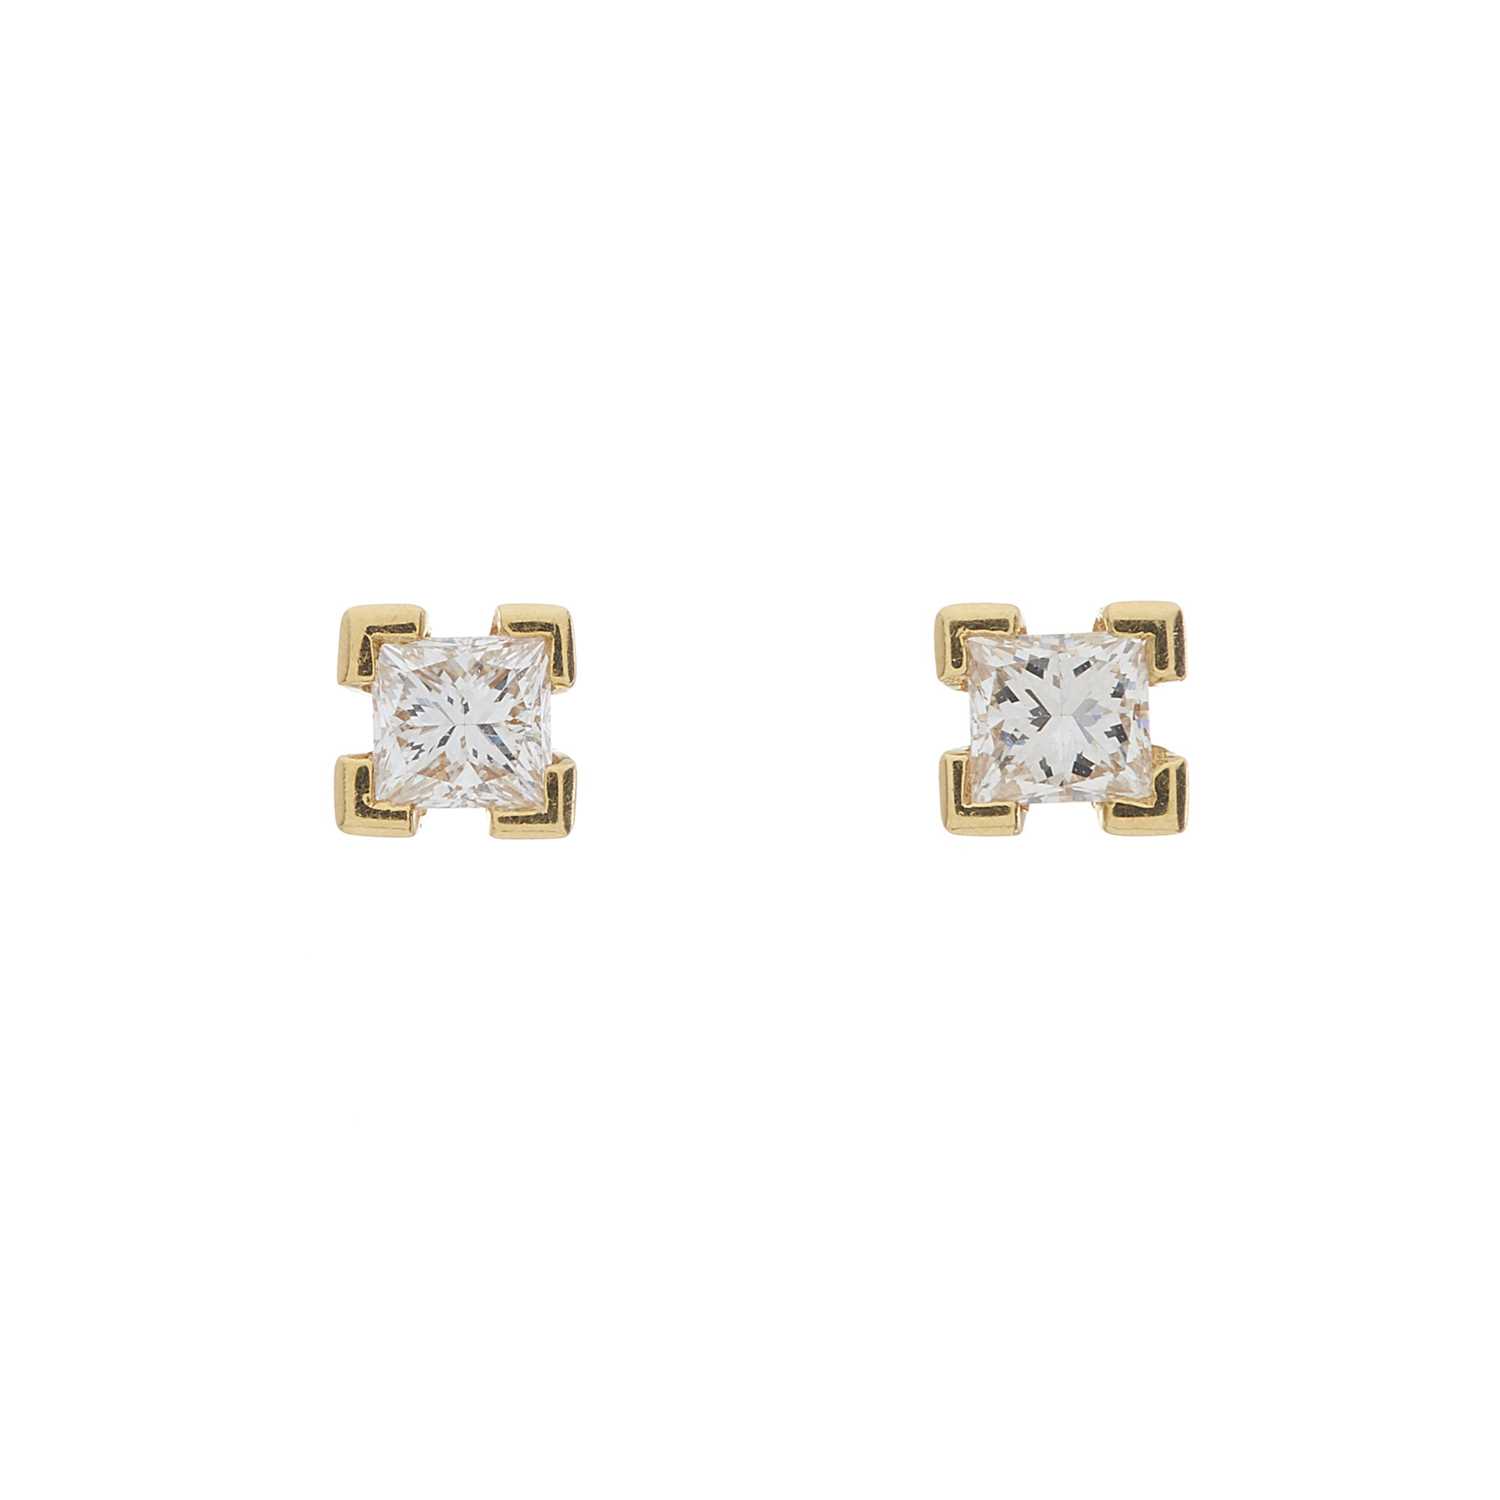 A pair of 18ct gold square-shape diamond single-stone stud earrings